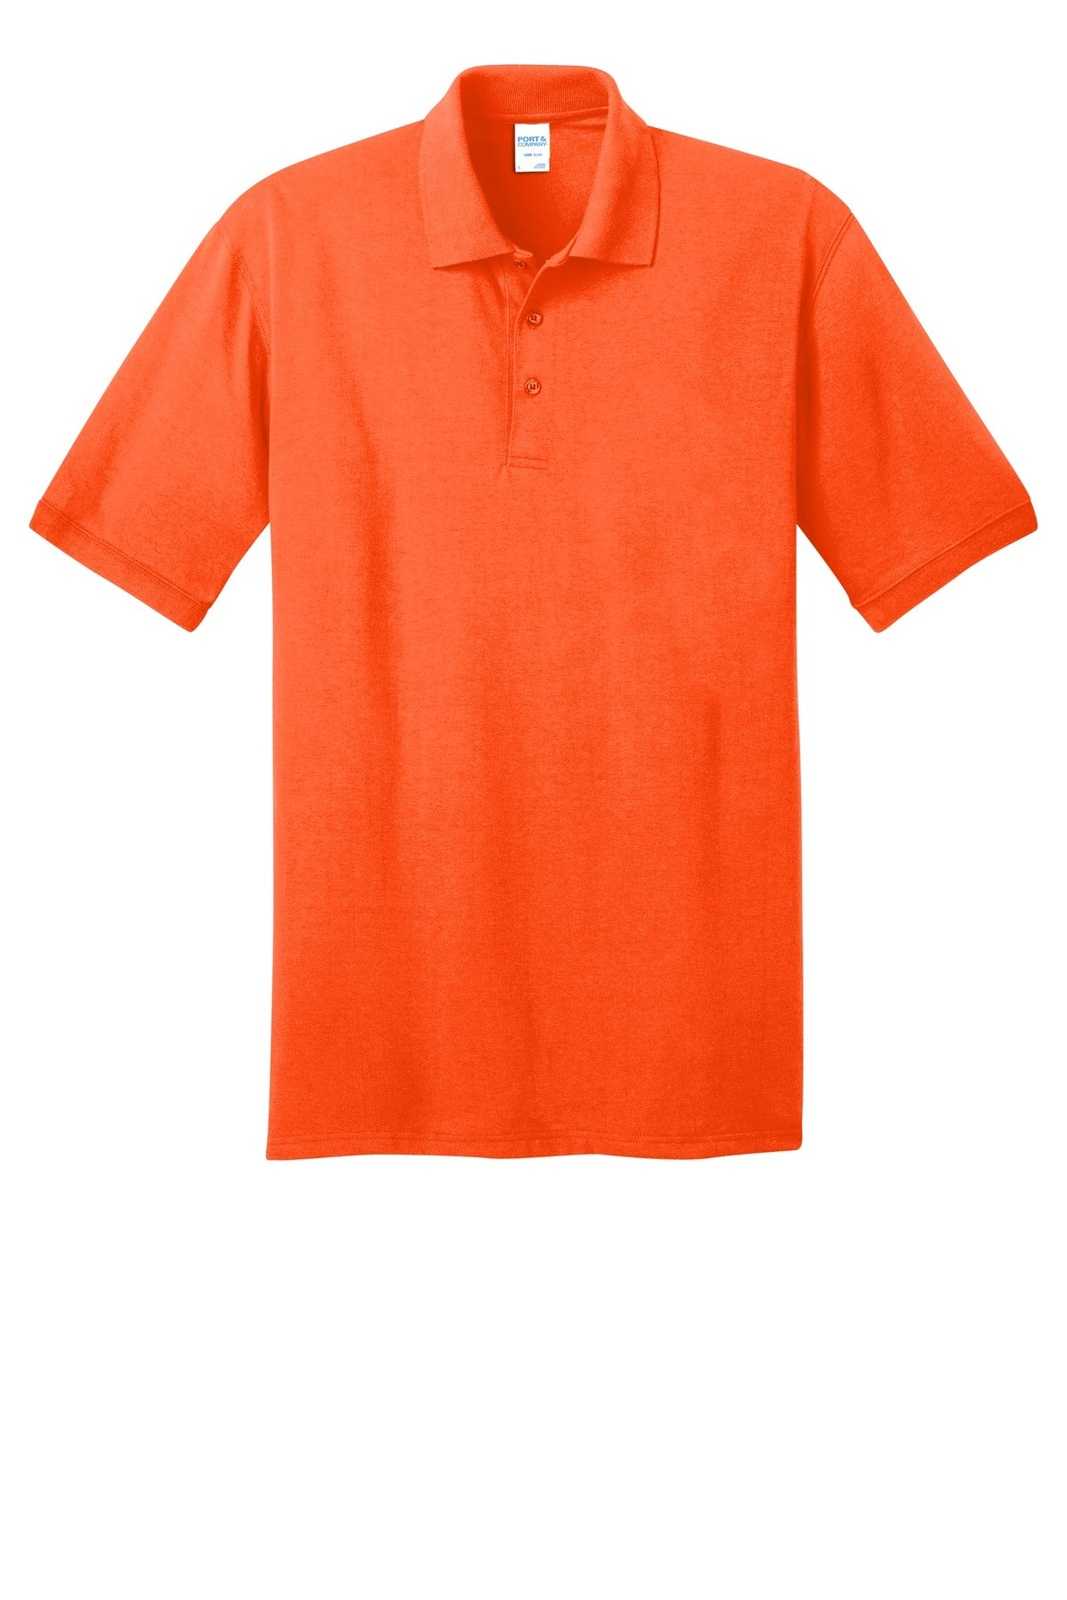 Port &amp; Company KP55 Core Blend Jersey Knit Polo - Safety Orange - HIT a Double - 5